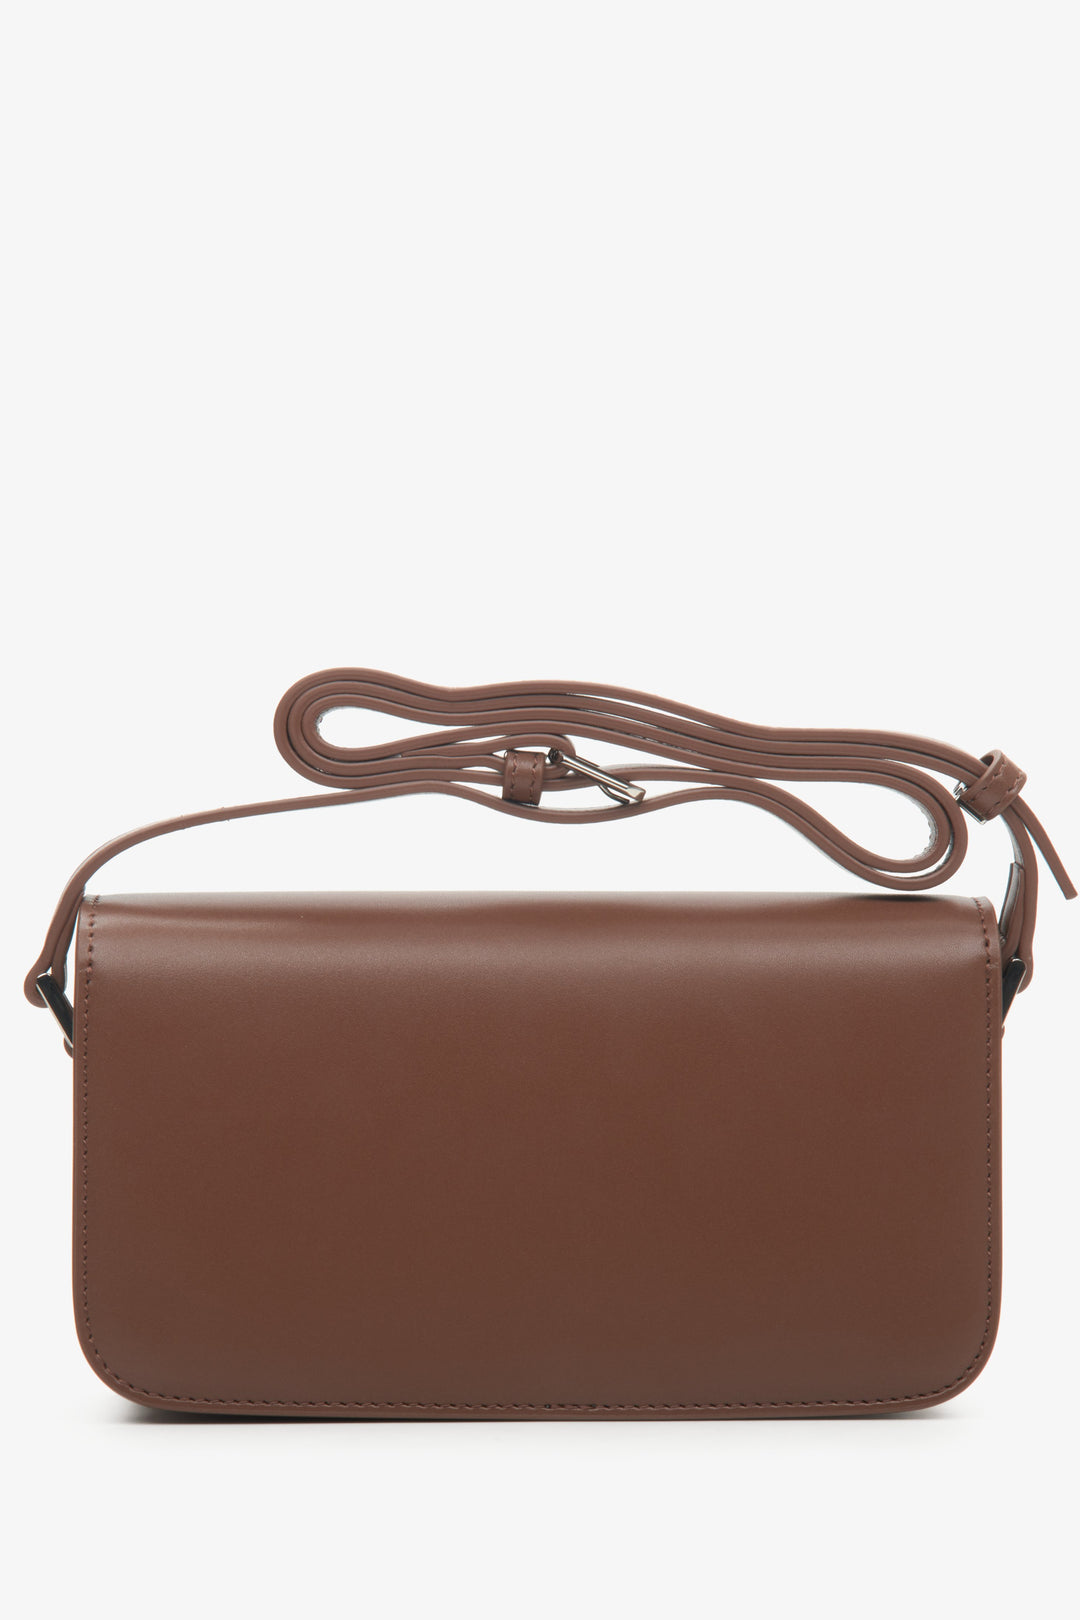 Leather, women's brown handbag Estro - reverse side.